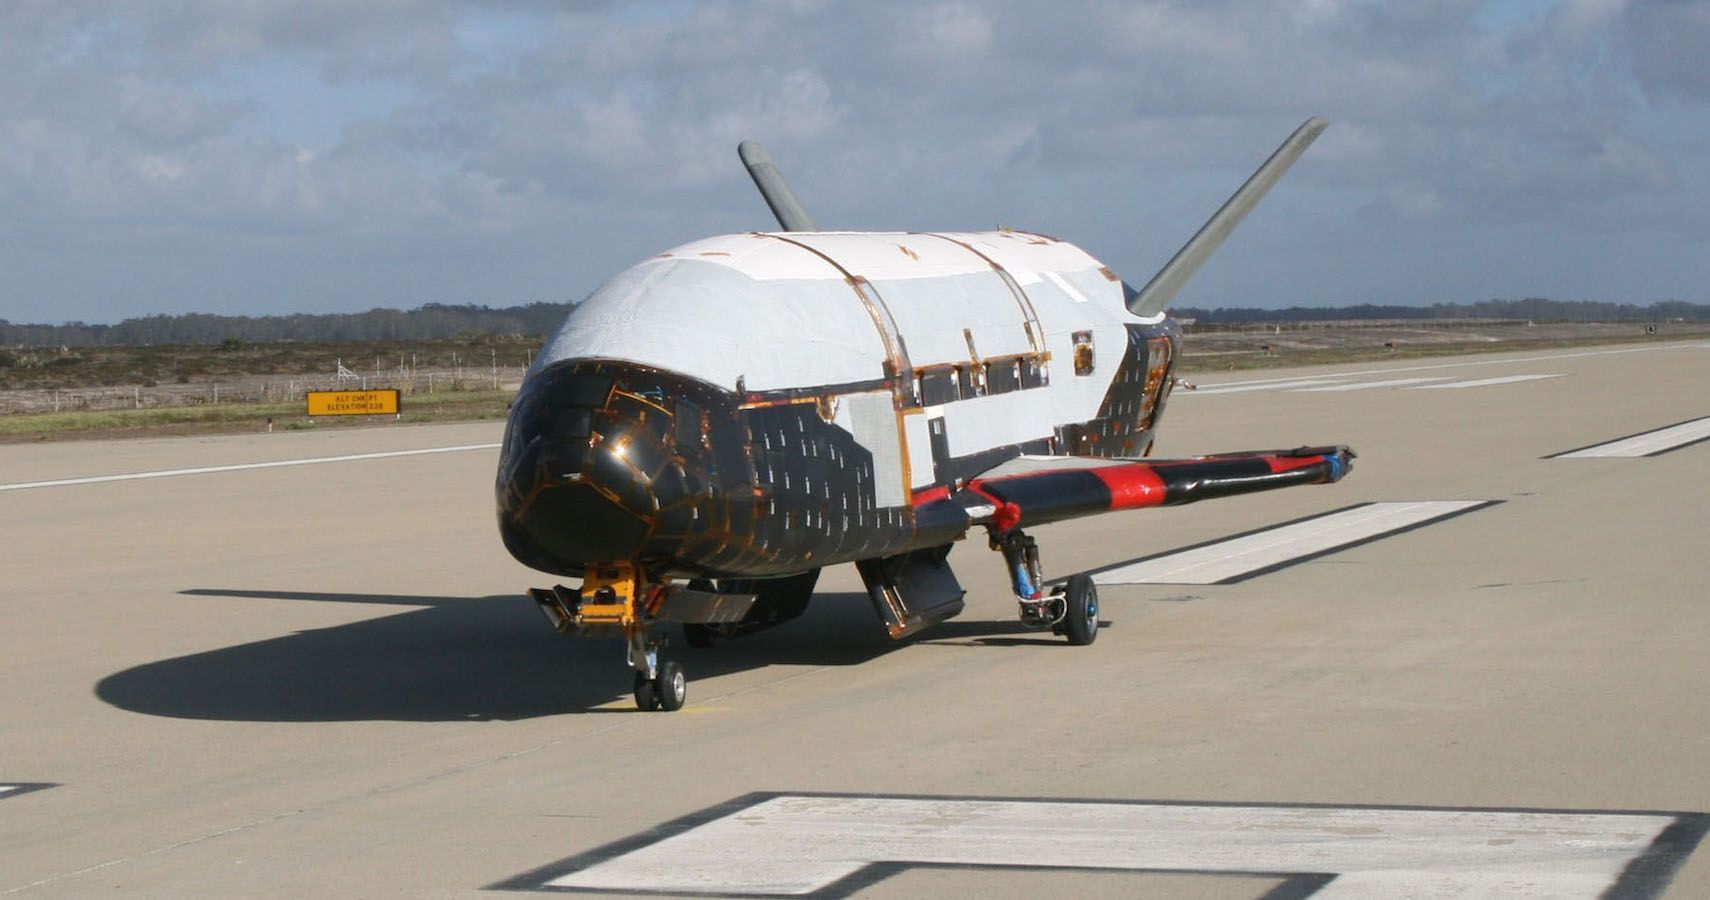 X-37 Orbital Test Vehicle on runway